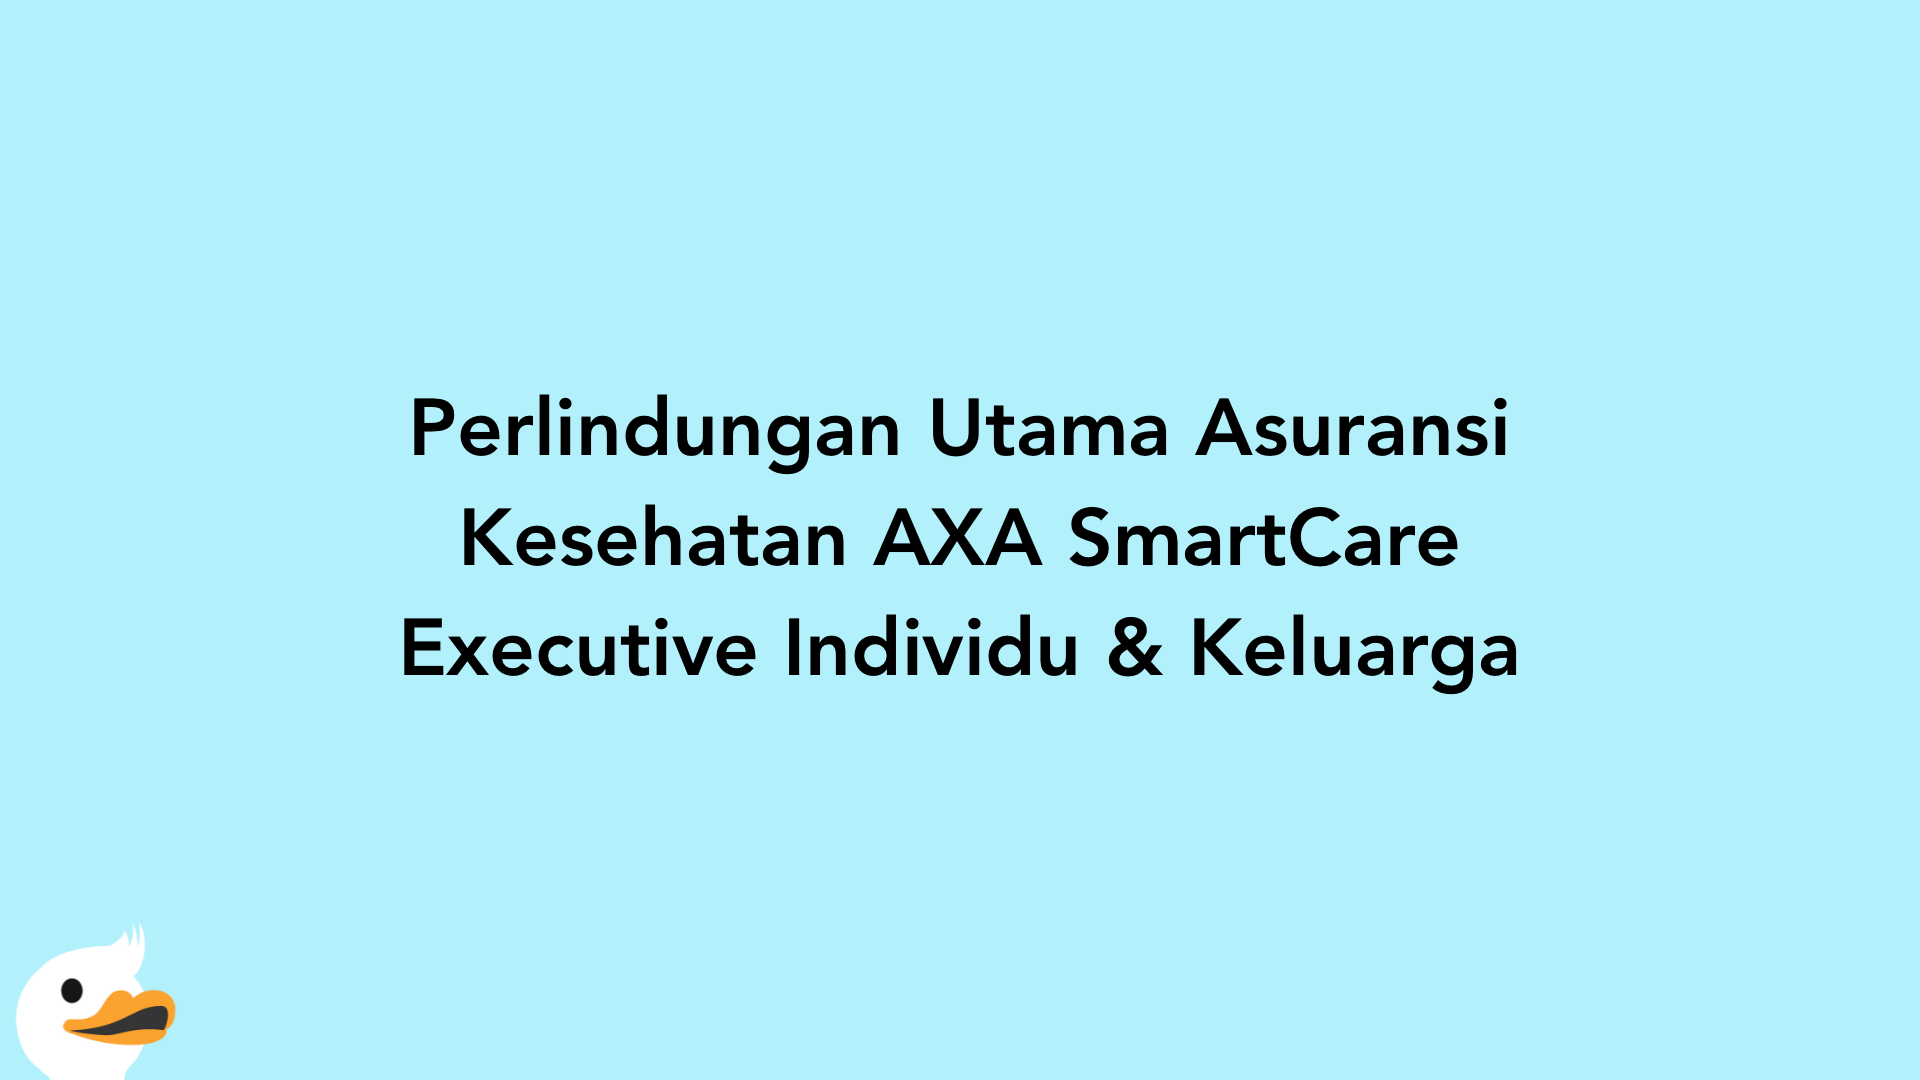 Perlindungan Utama Asuransi Kesehatan AXA SmartCare Executive Individu & Keluarga